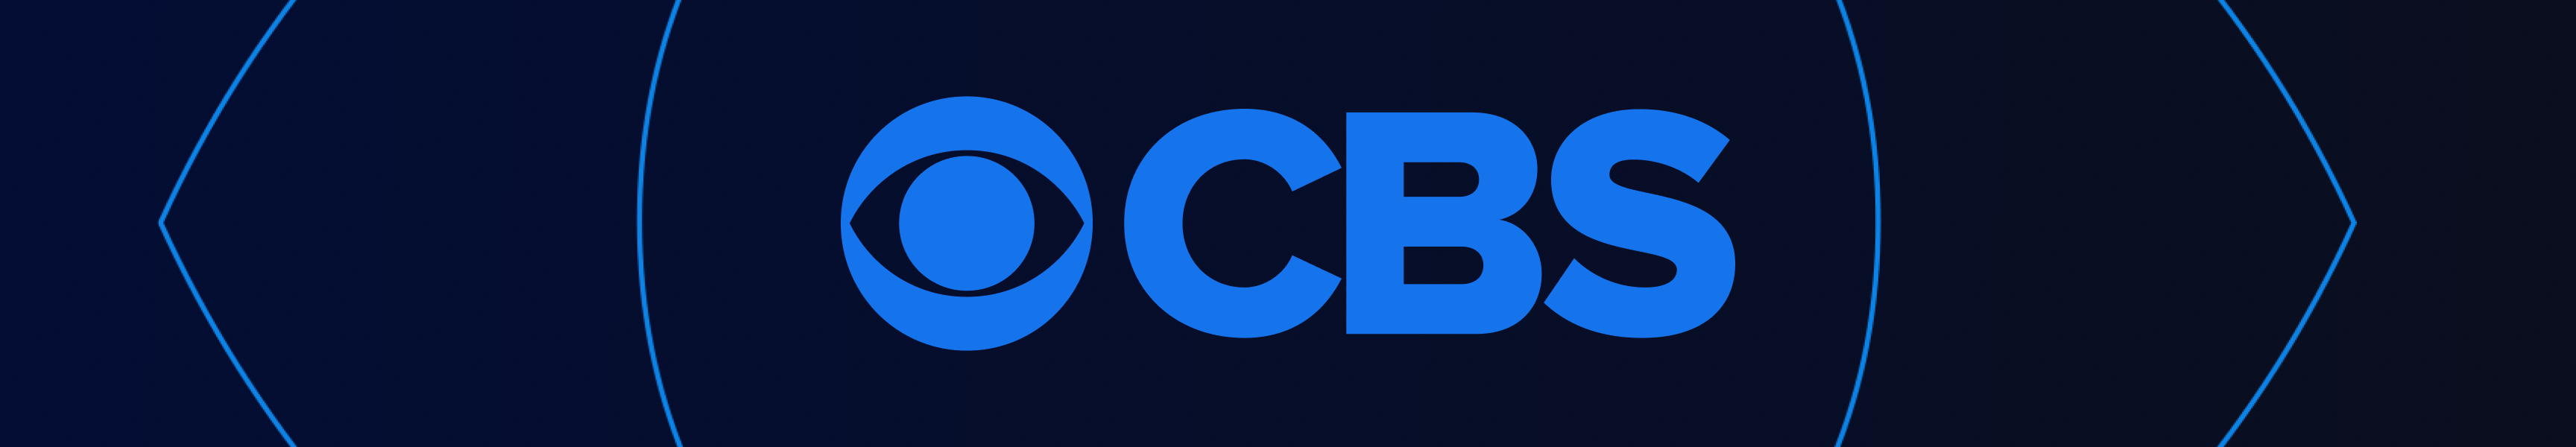 CBS Entertainment Clothing